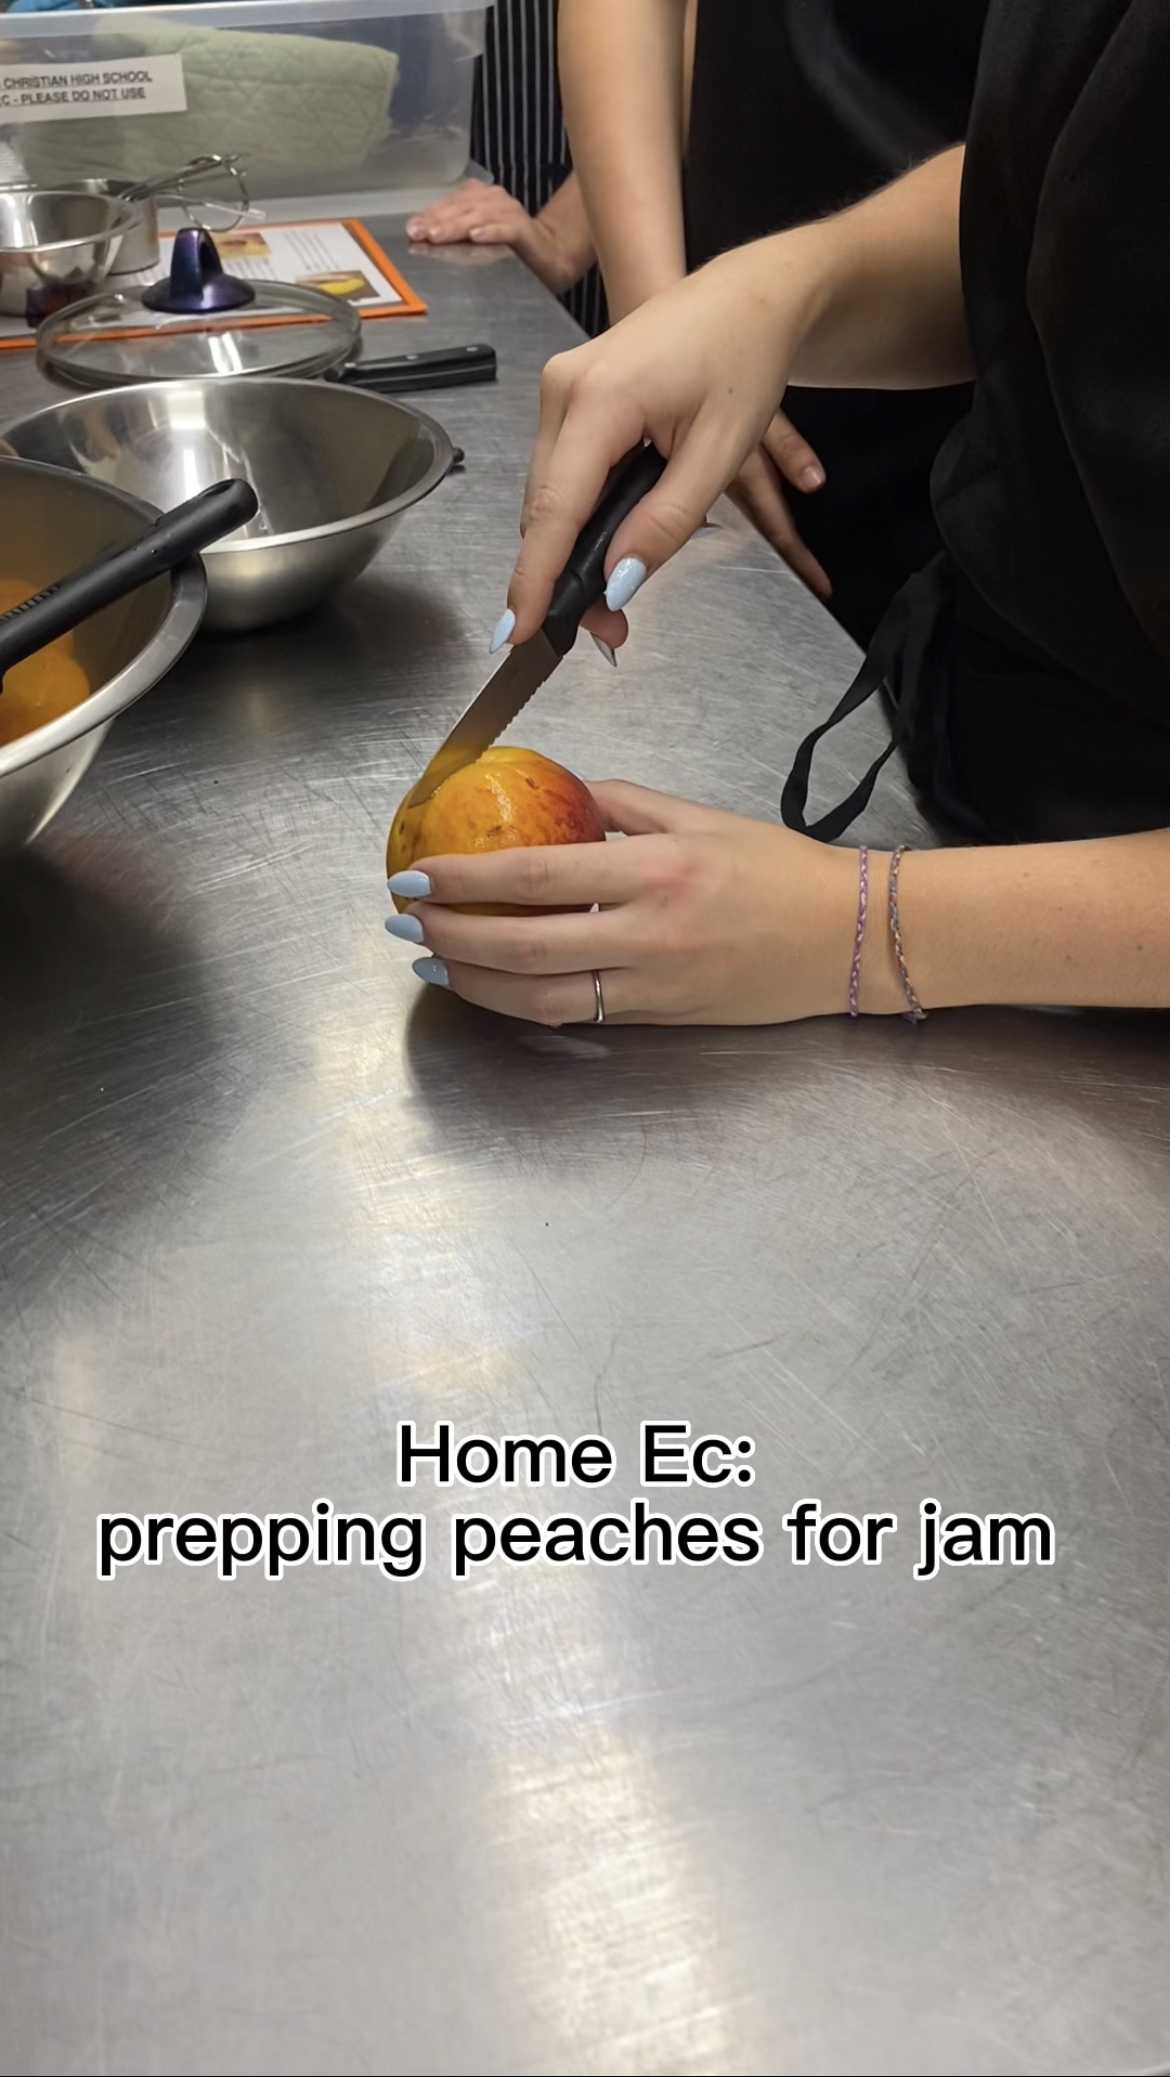 [Reel] Home Ec: Prepping peaches for jam